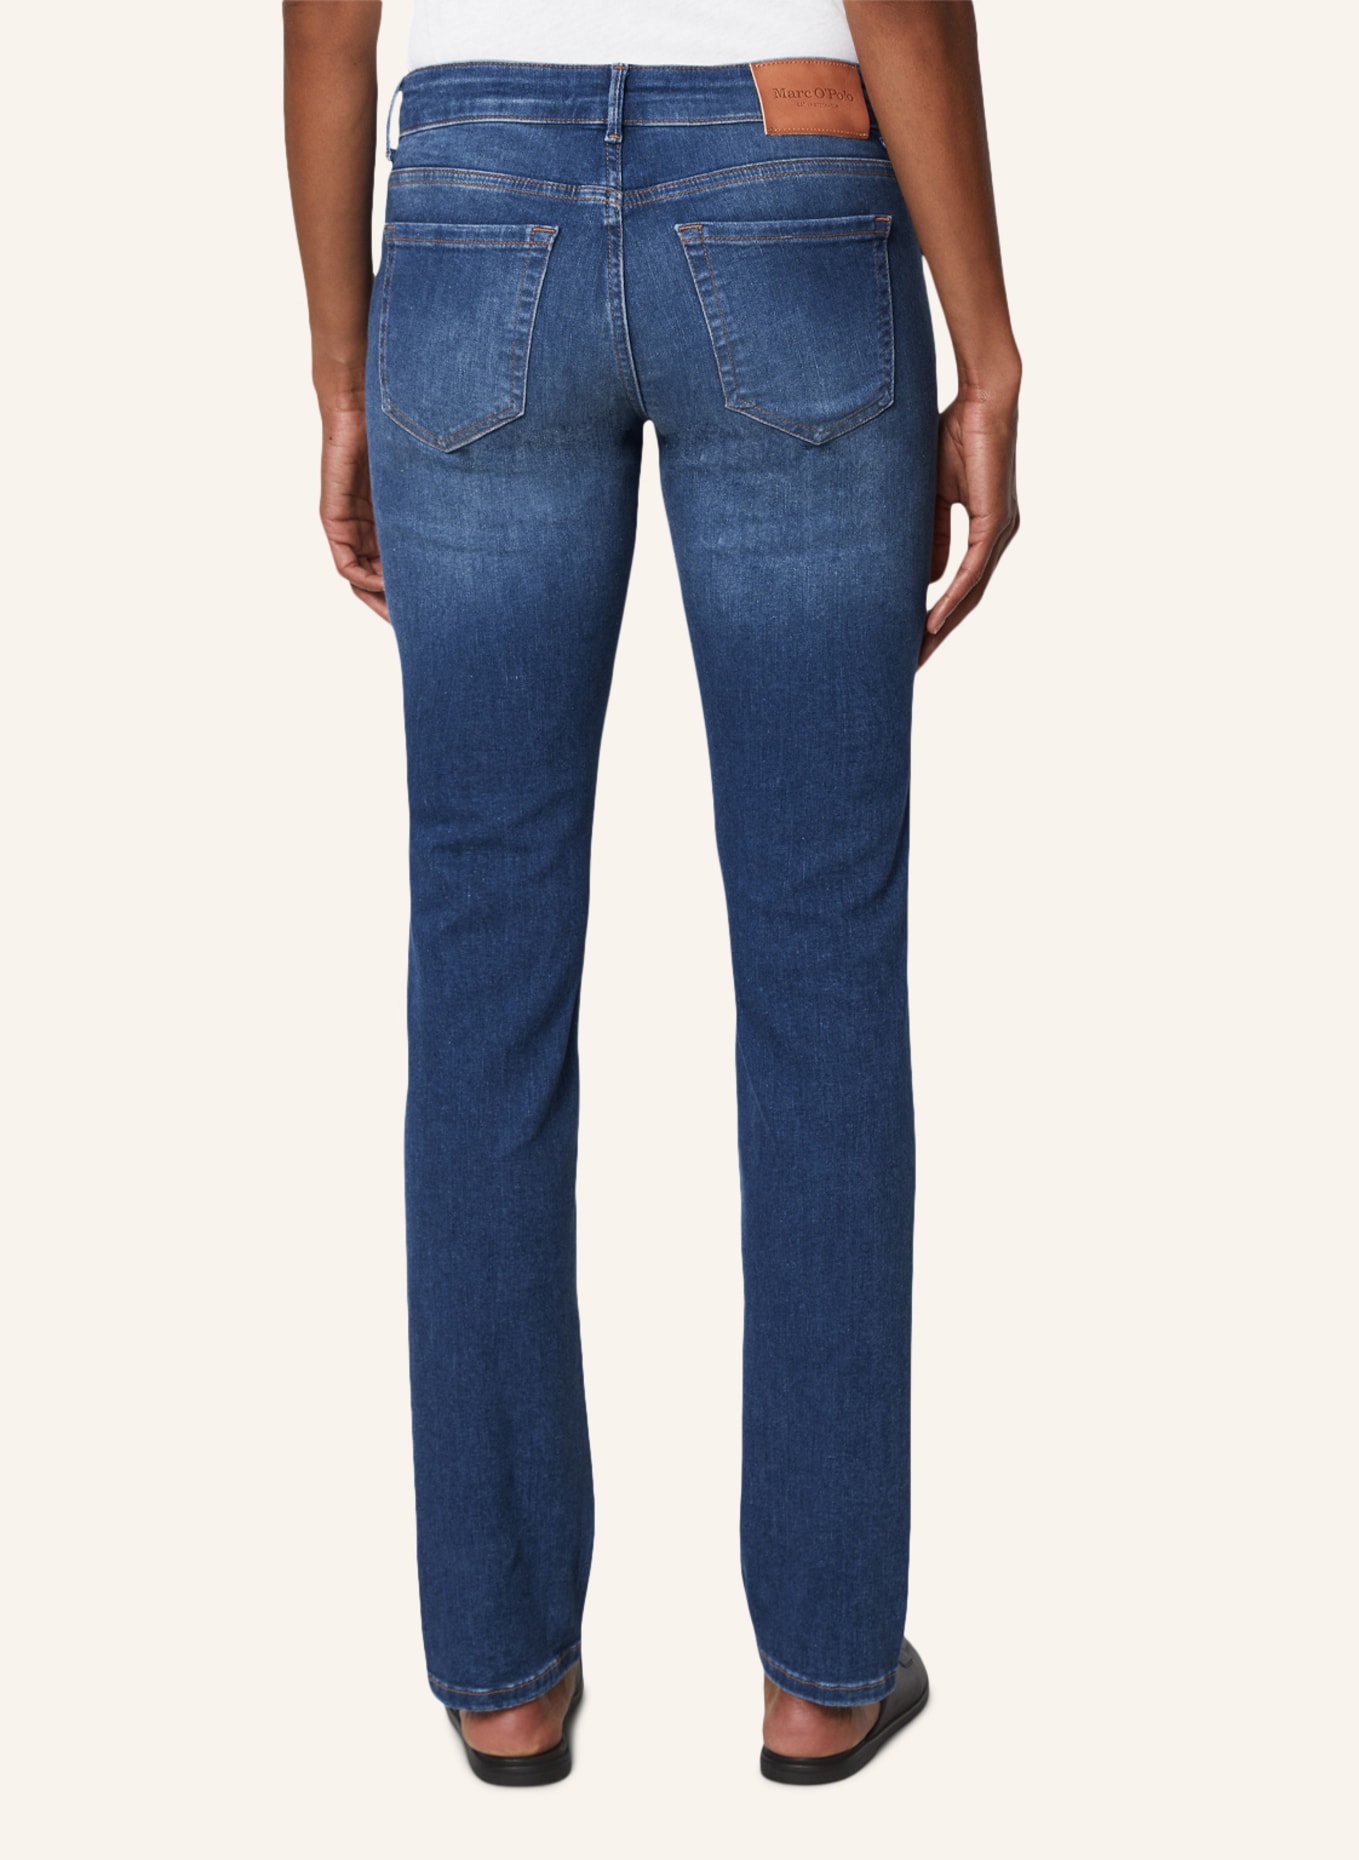 Marc O'Polo Jeans Modell ALBY straight, Farbe: DUNKELBLAU (Bild 2)